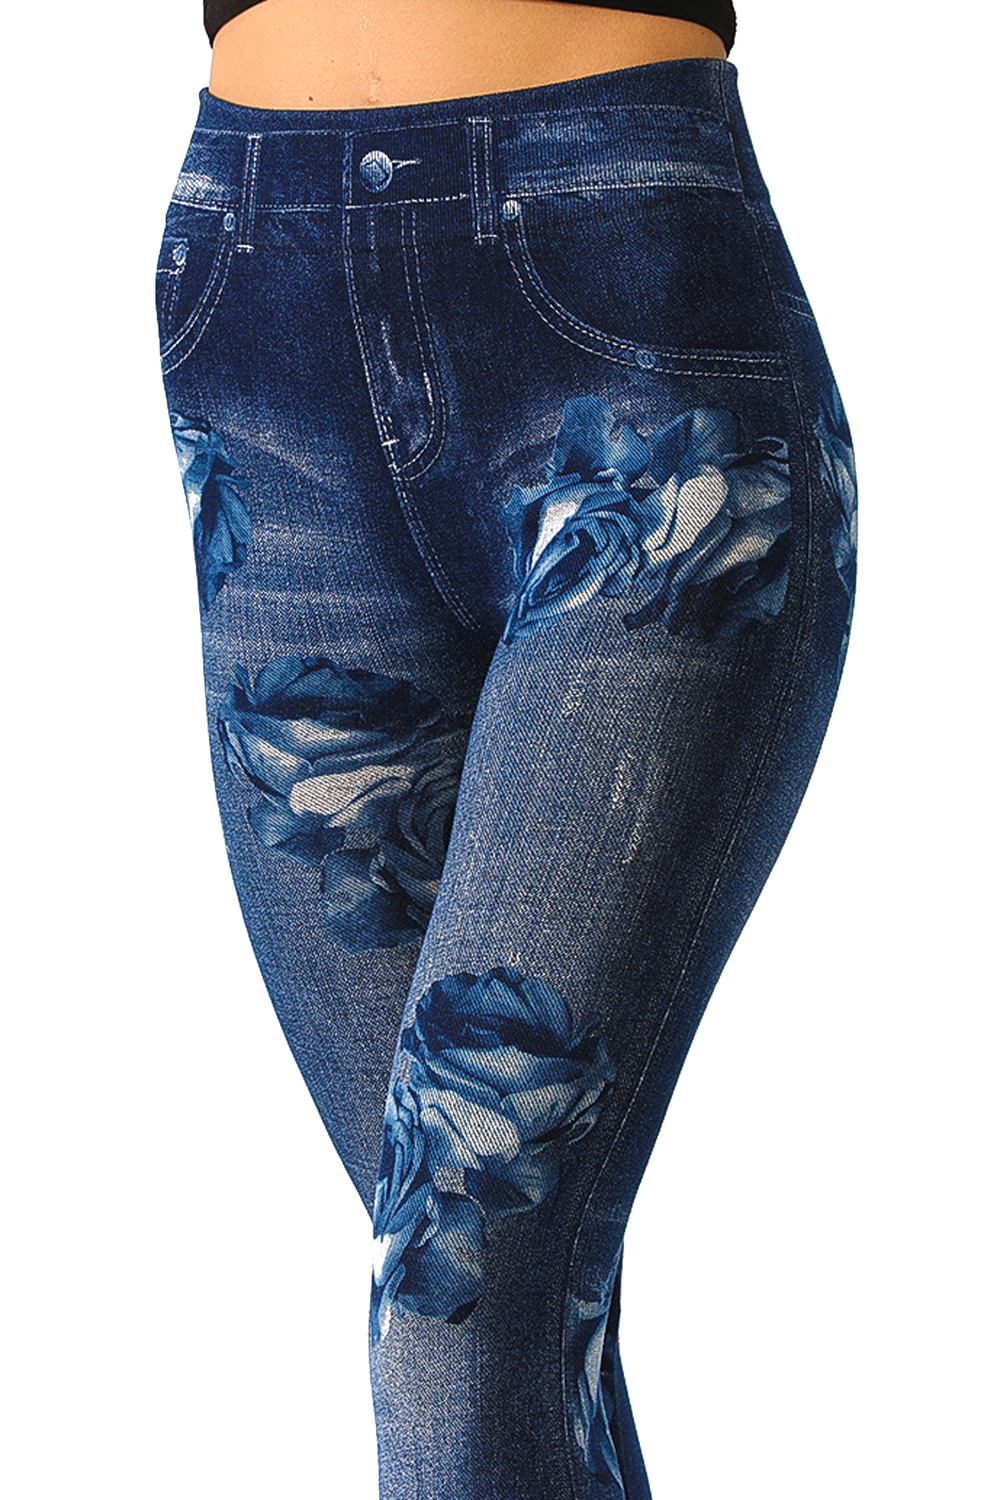 Denim Leggings with Multiple Large Blue Rose Pattern - 7